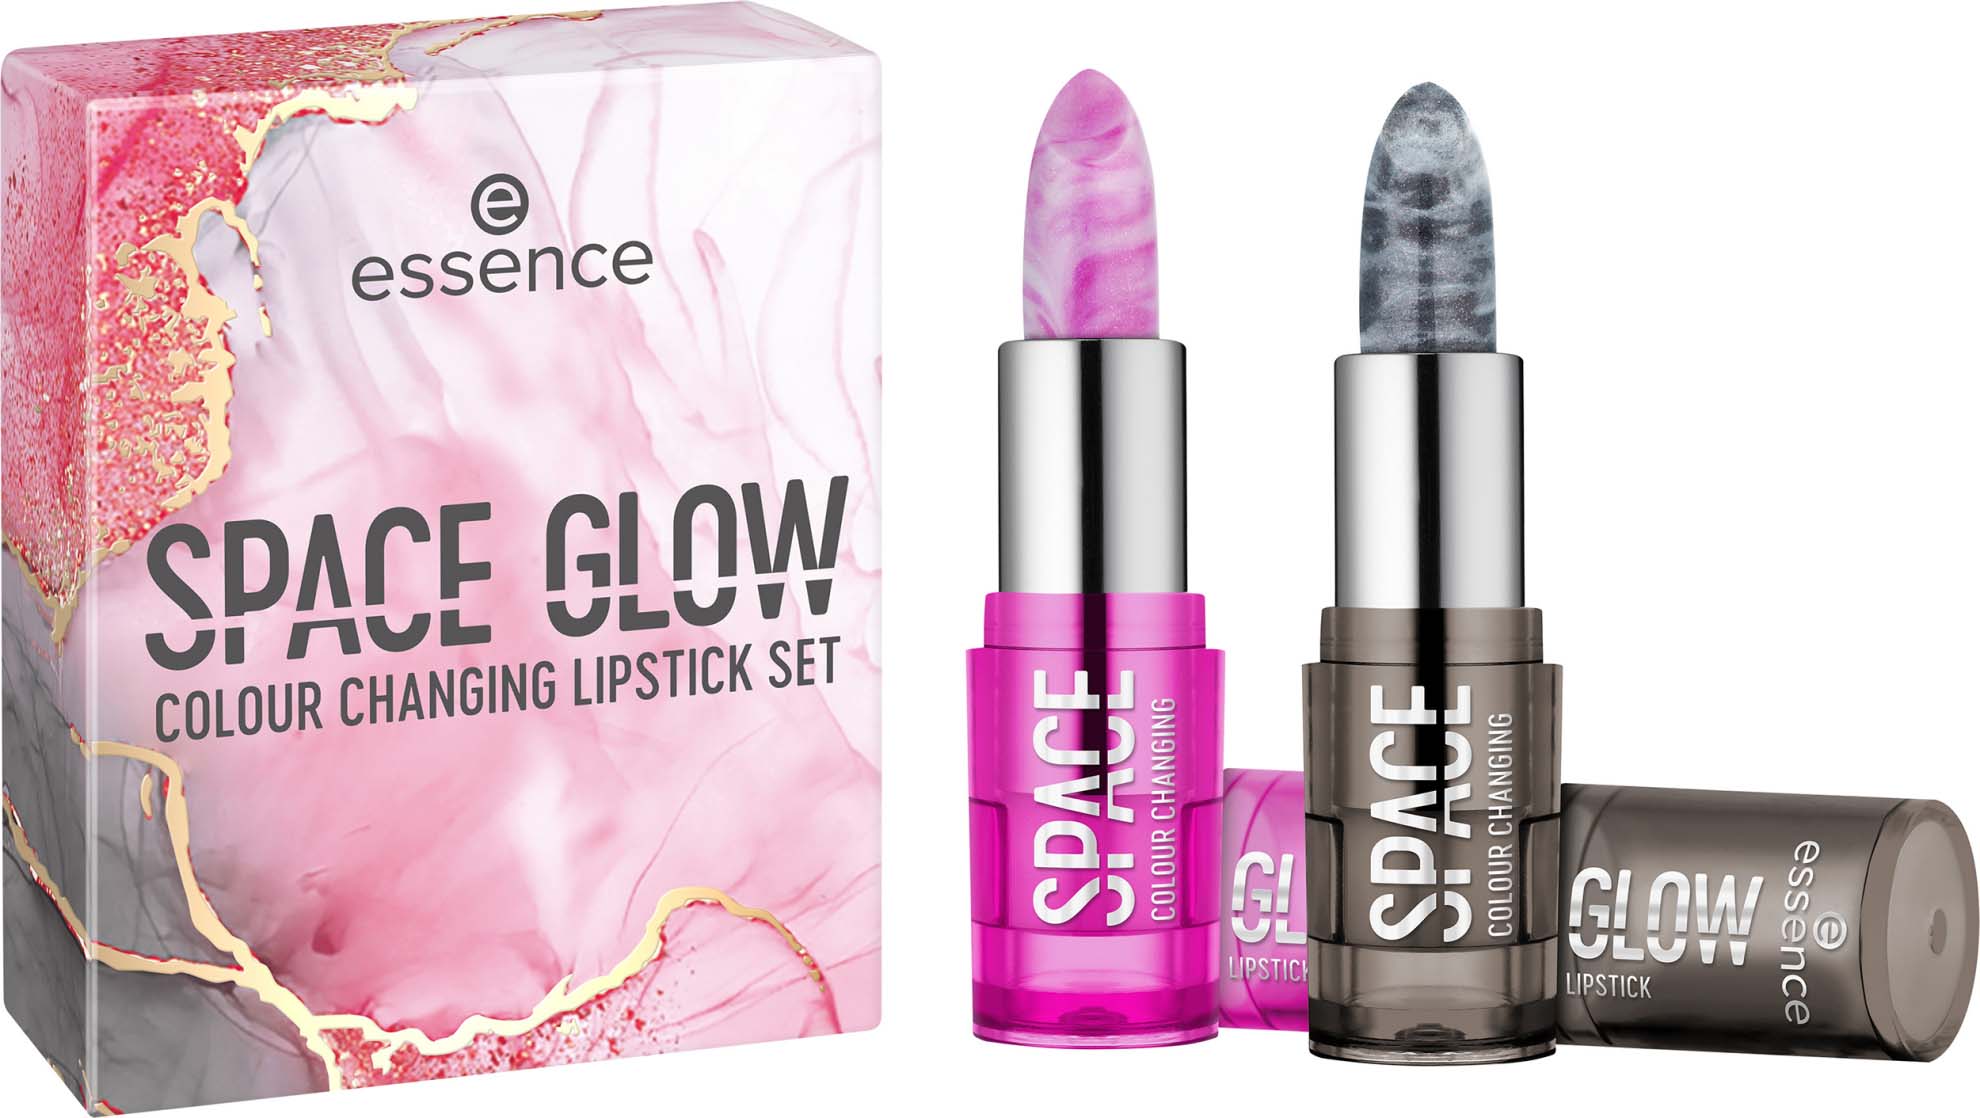 essence Space Glow Colour Changing Set Lipstick